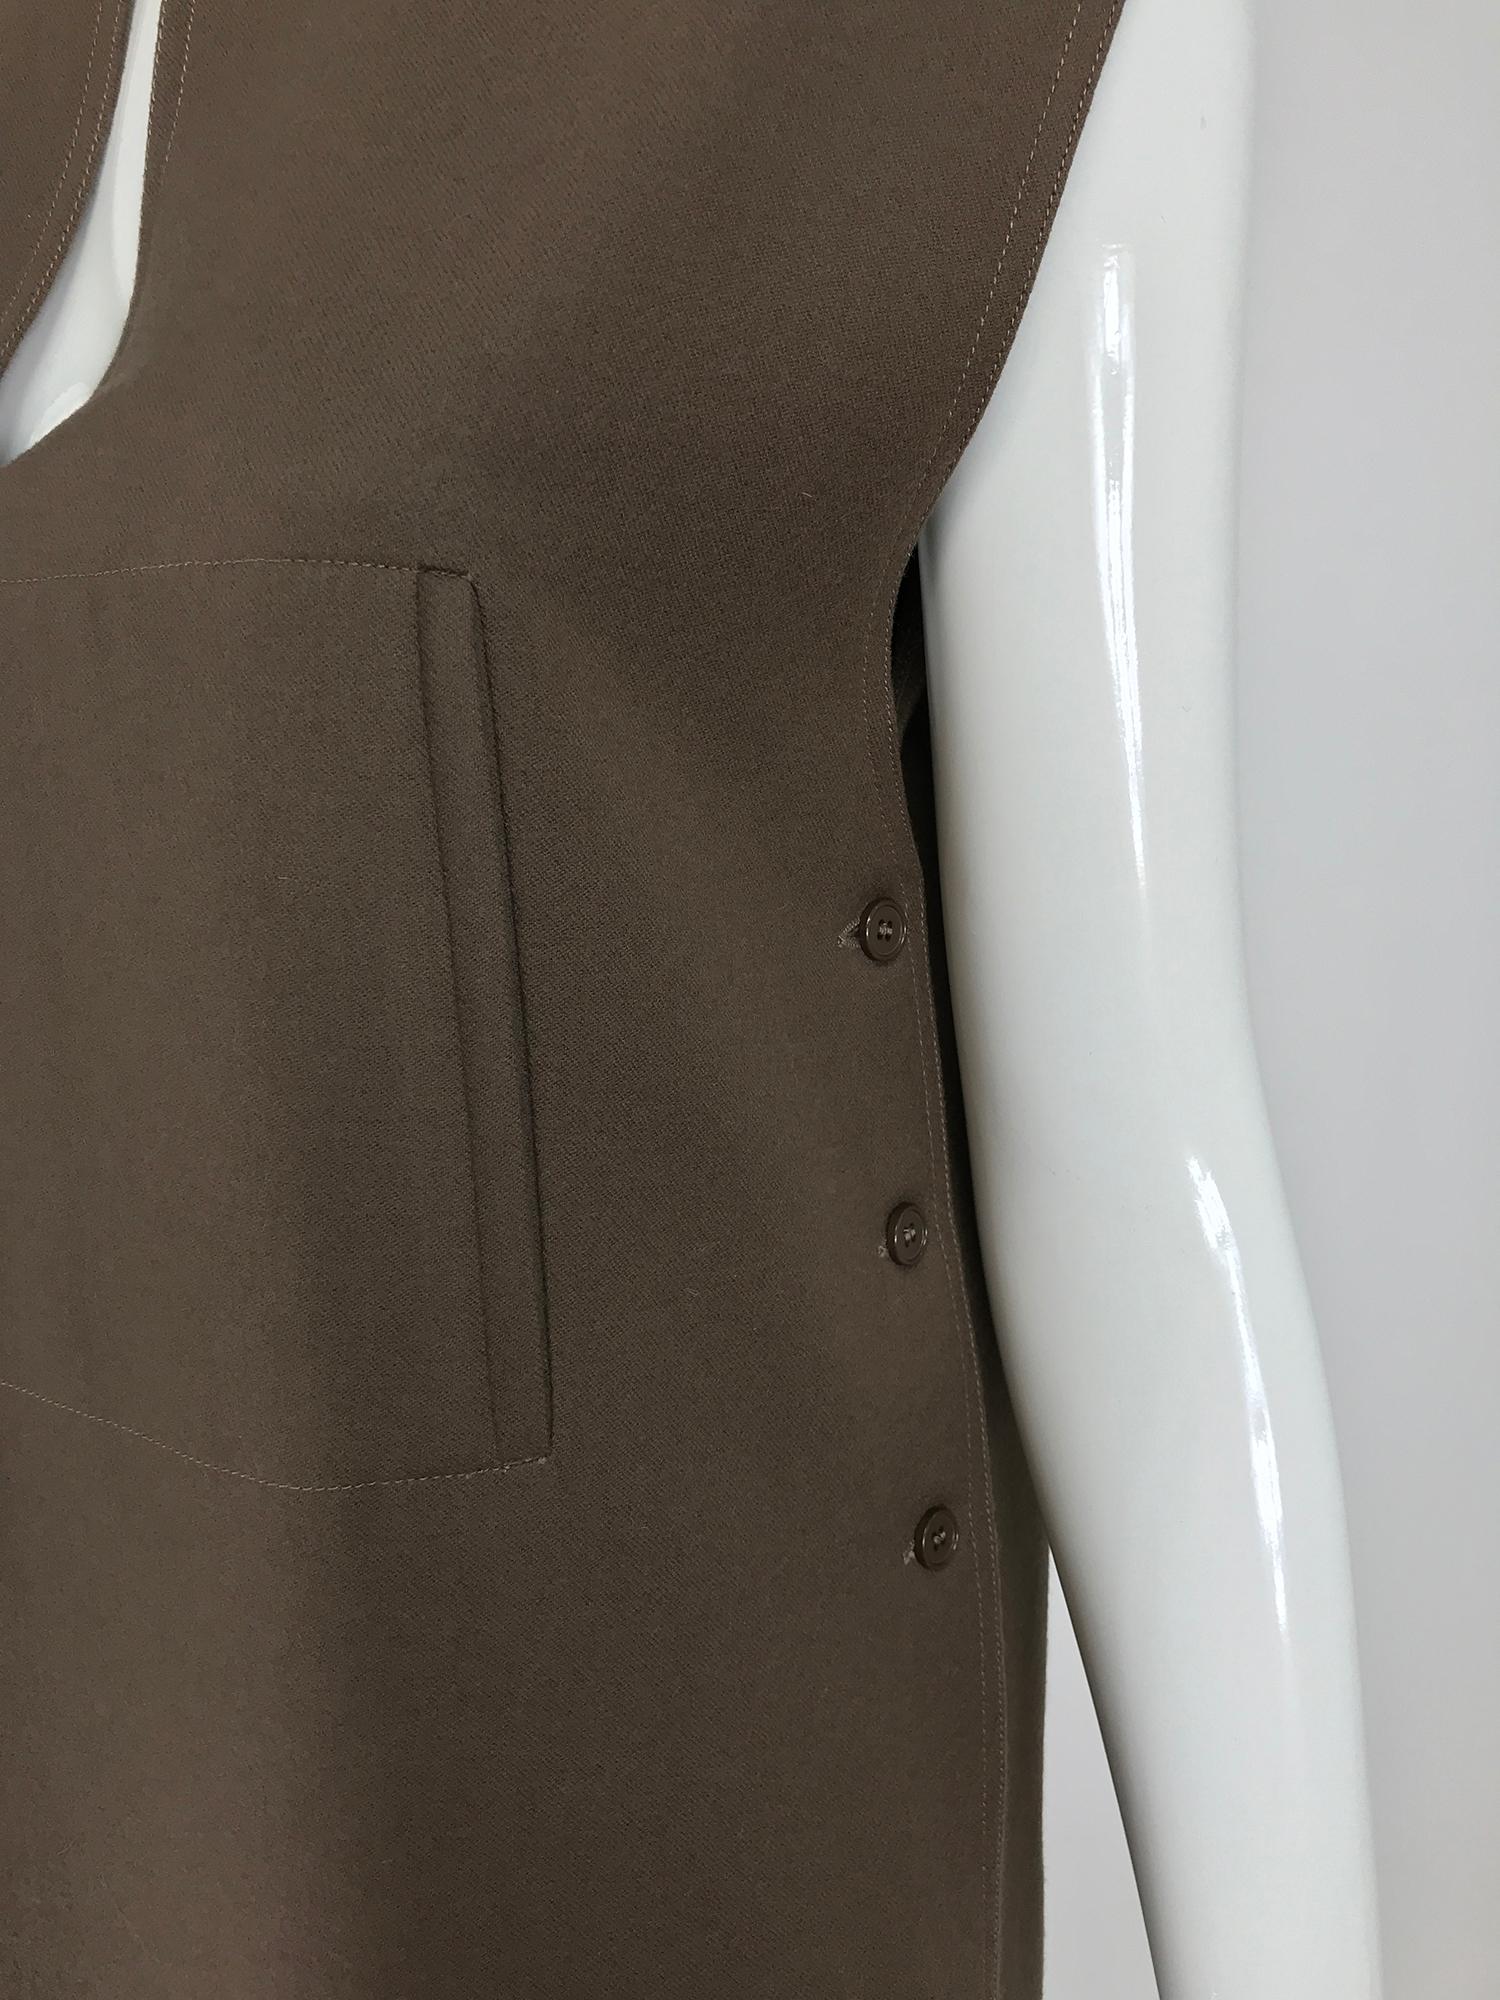 Guy Laroche Chocolate Brown Double Face Wool Tunic Dress 1960s 9